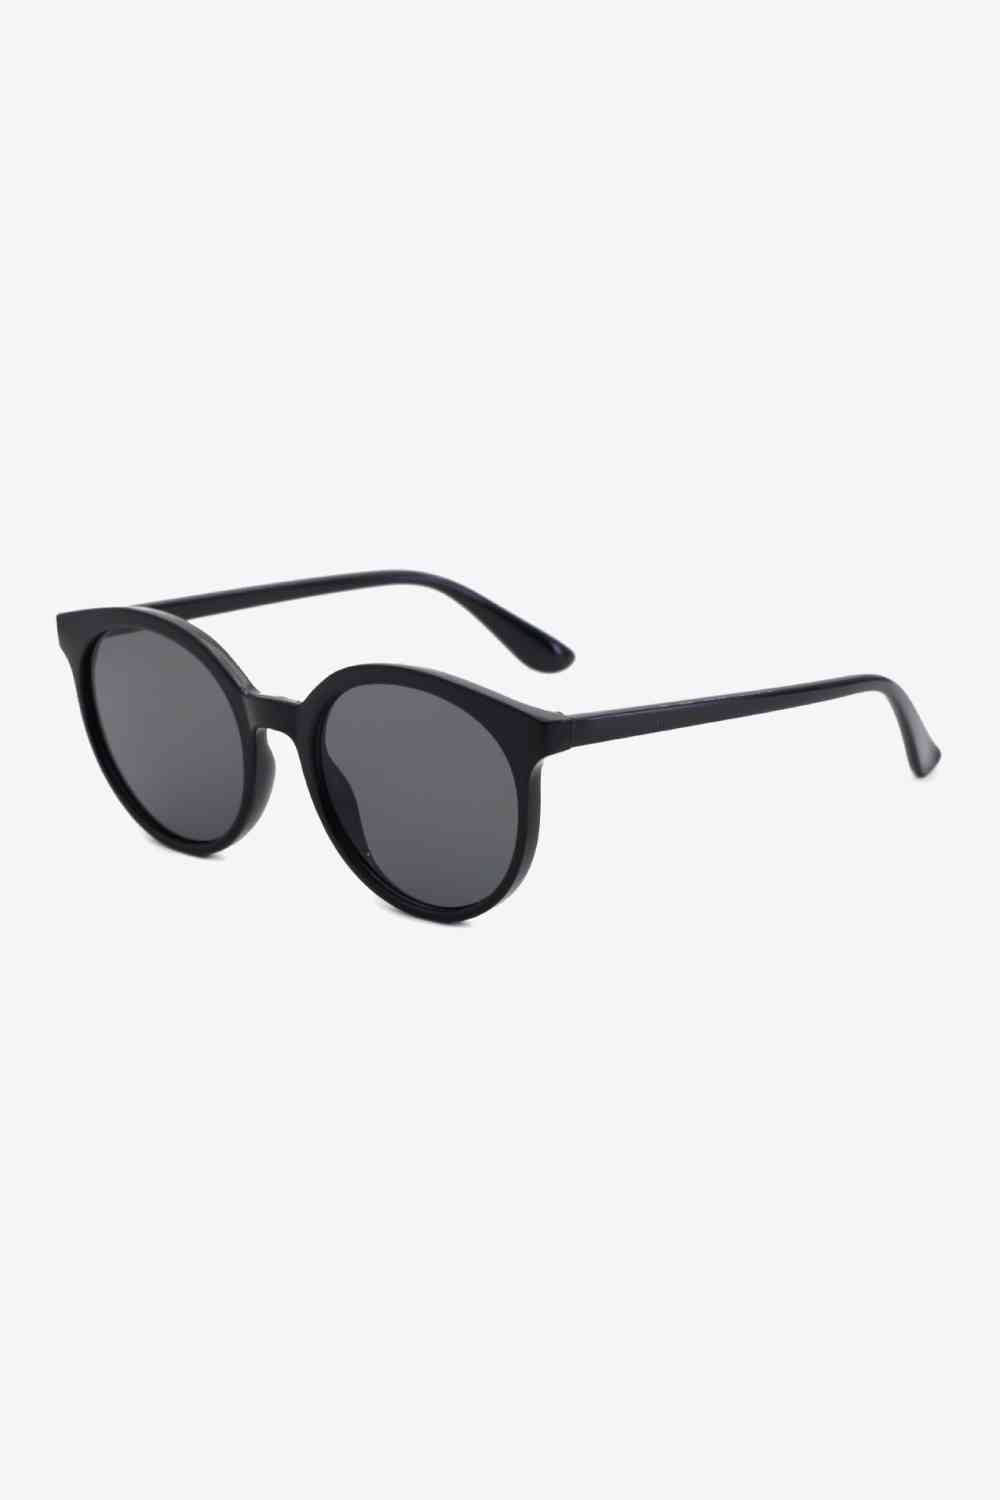 Round Full Rim Polycarbonate Frame Sunglasses Black One Size